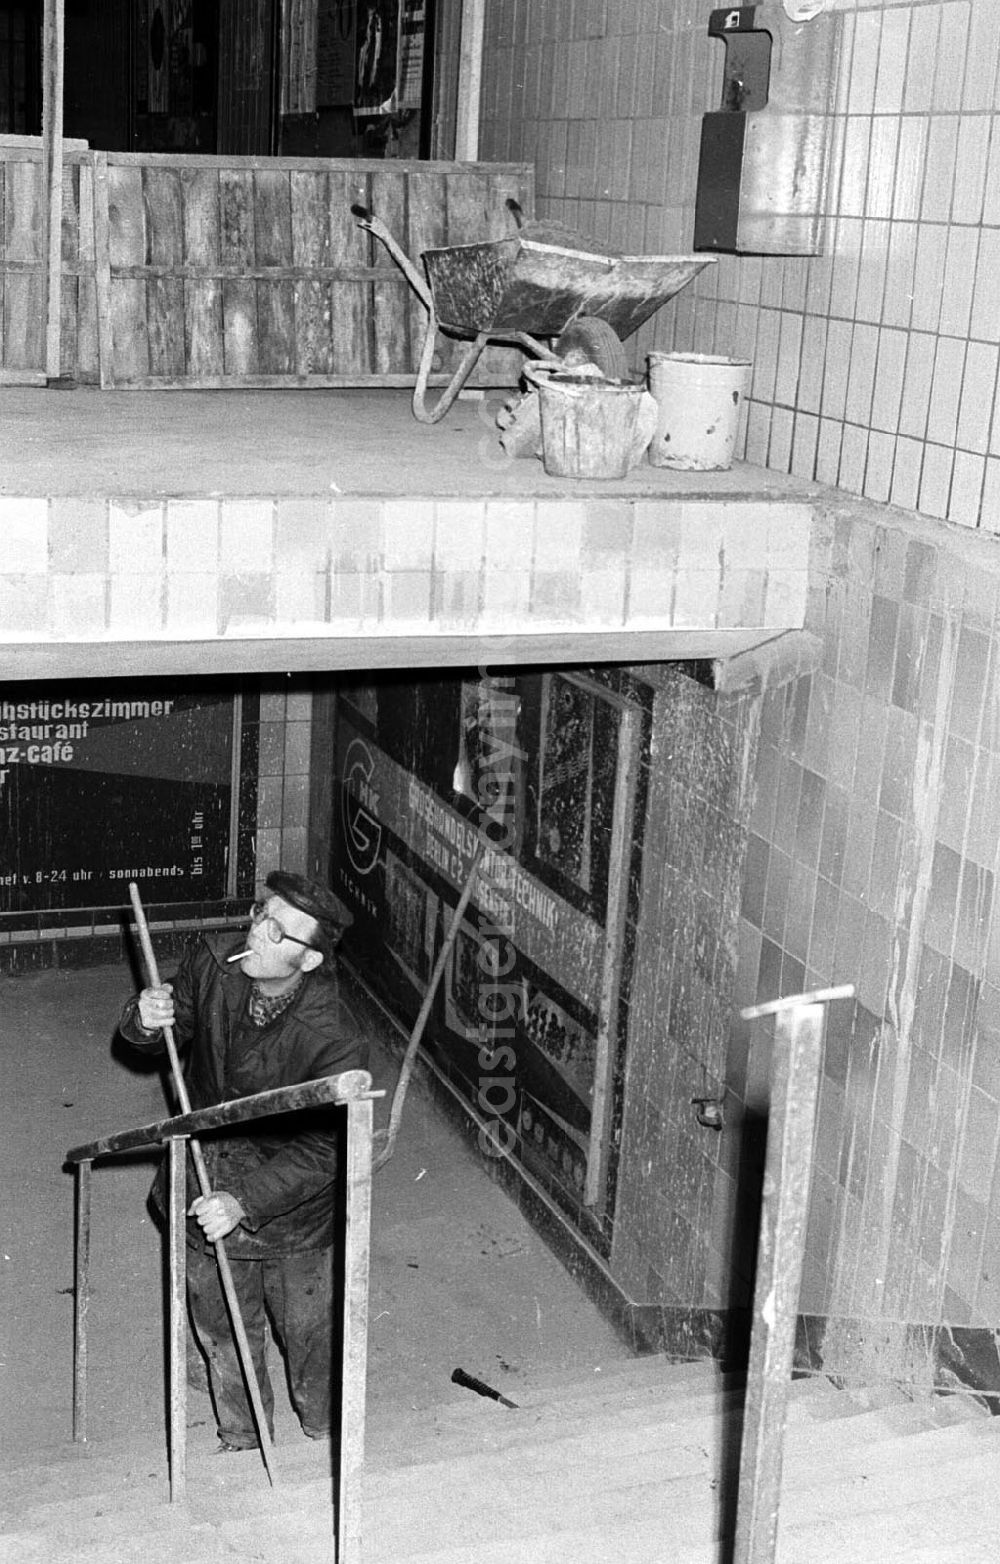 GDR image archive: Berlin - Berlin Tunnelöffnung, Berliner U-Bahn U2 und U6 29.11.9